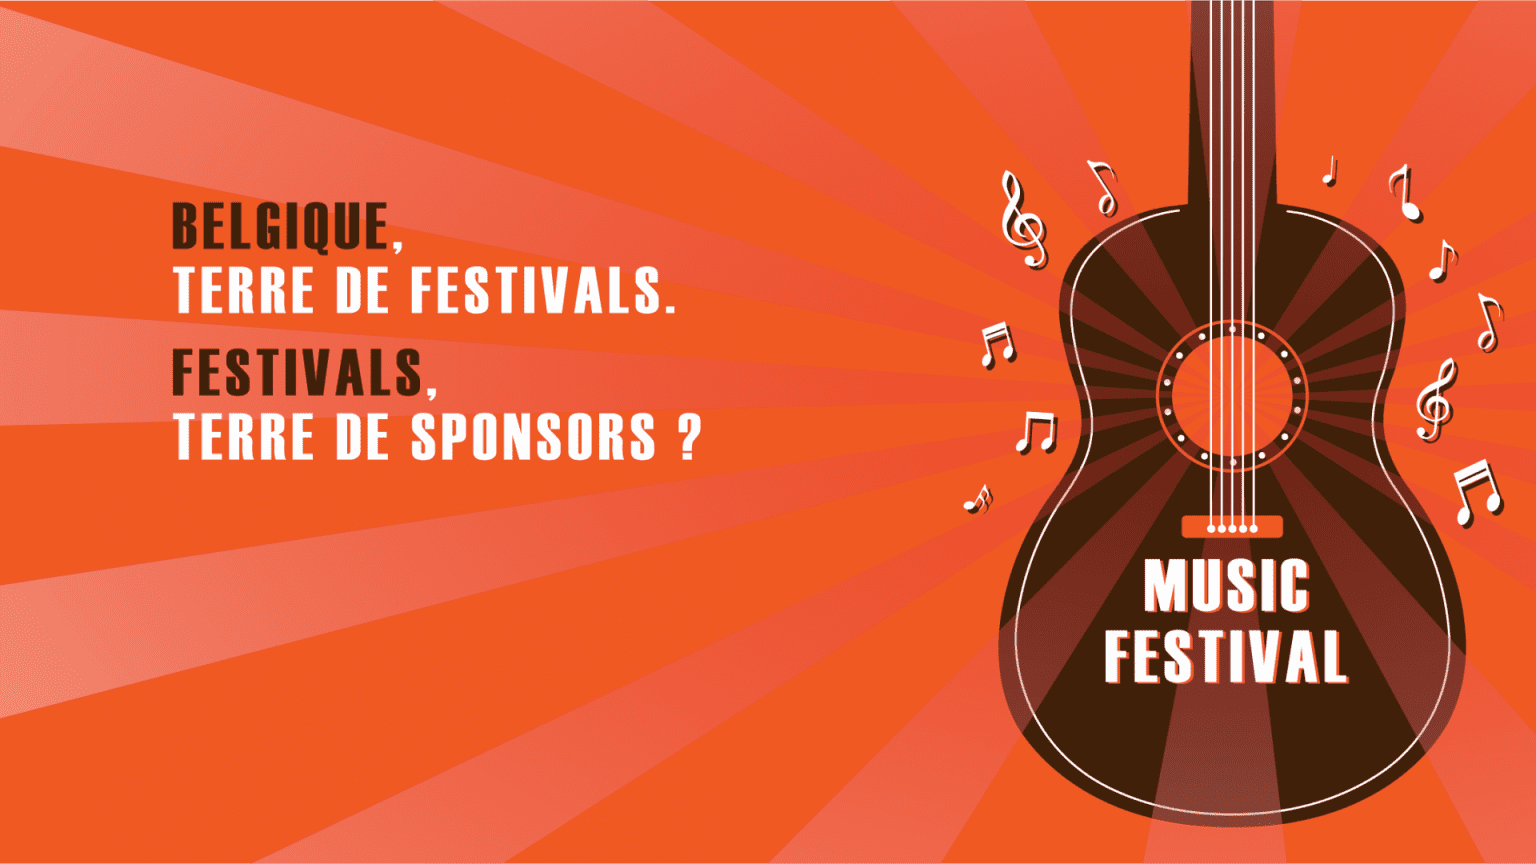 Belgique, terre de festivals. Festivals, terre de sponsors ?